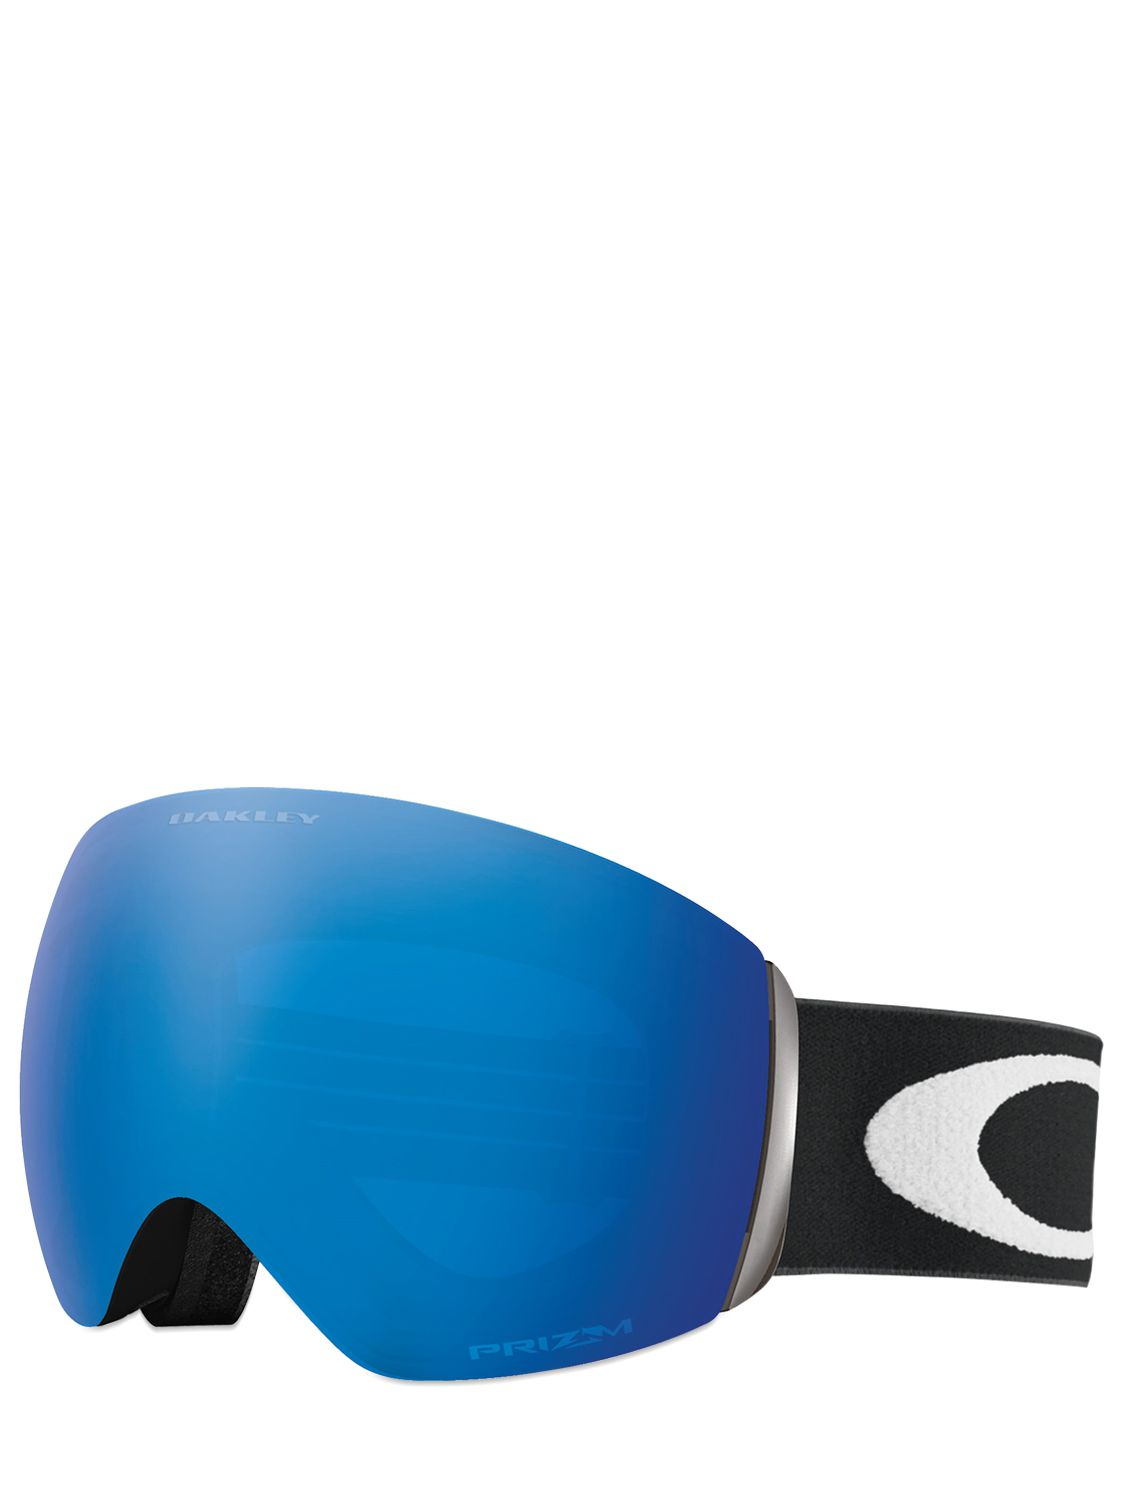 oakley ski goggles blue